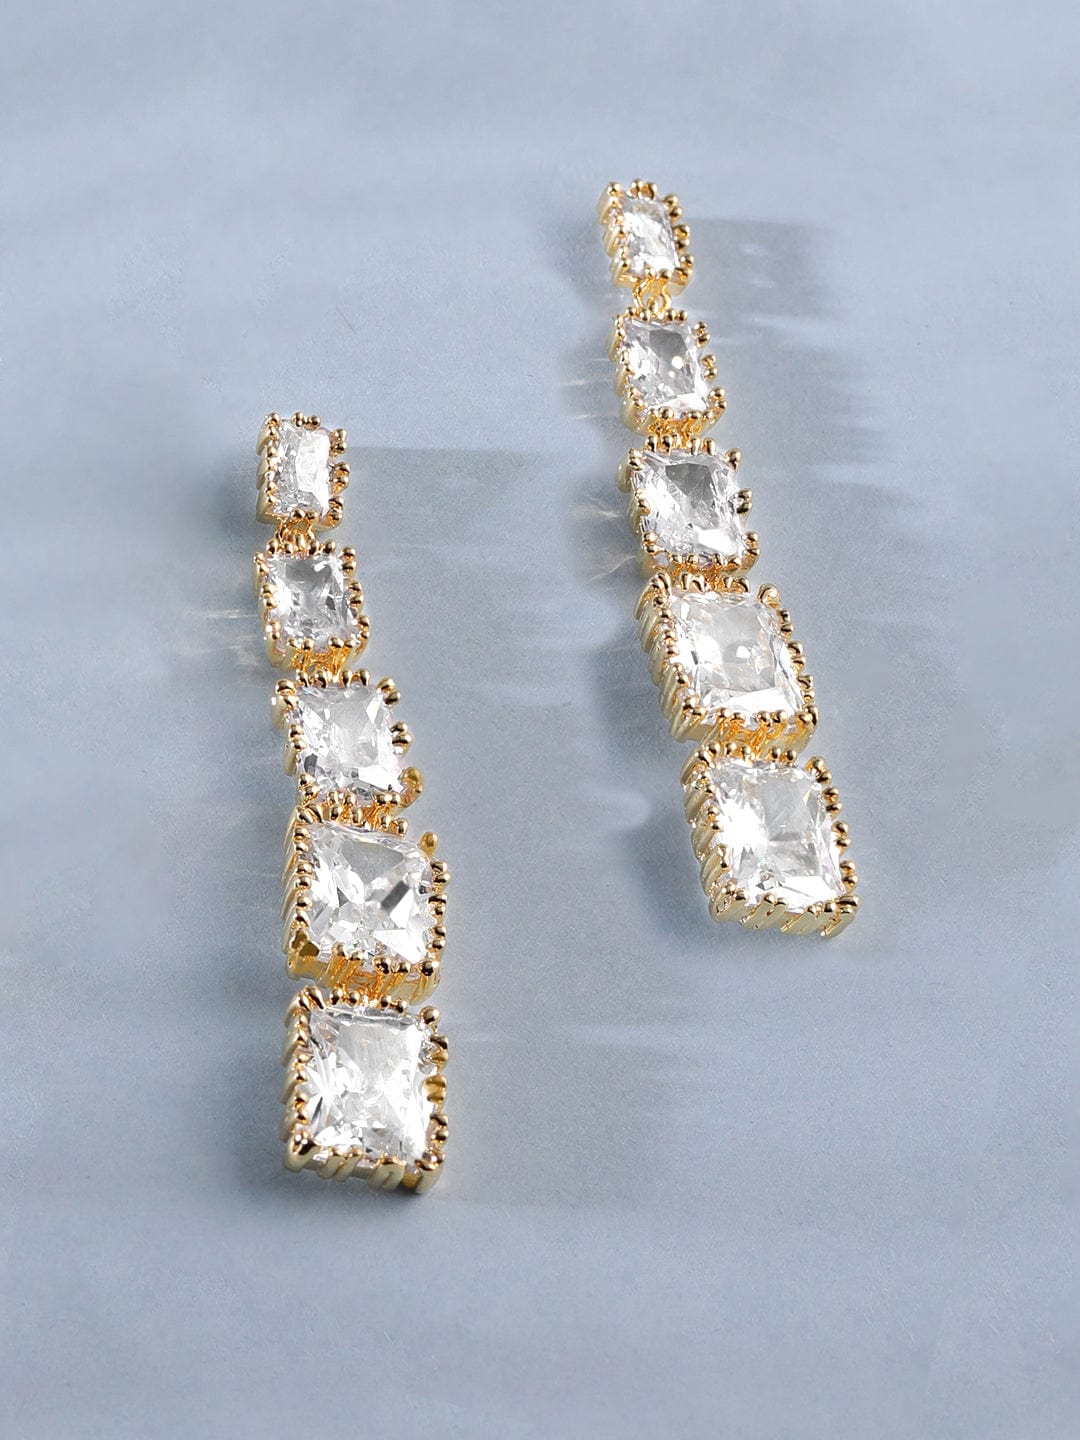 22K Gold plated Korean Crystals Statement dangle Earrings Earrings